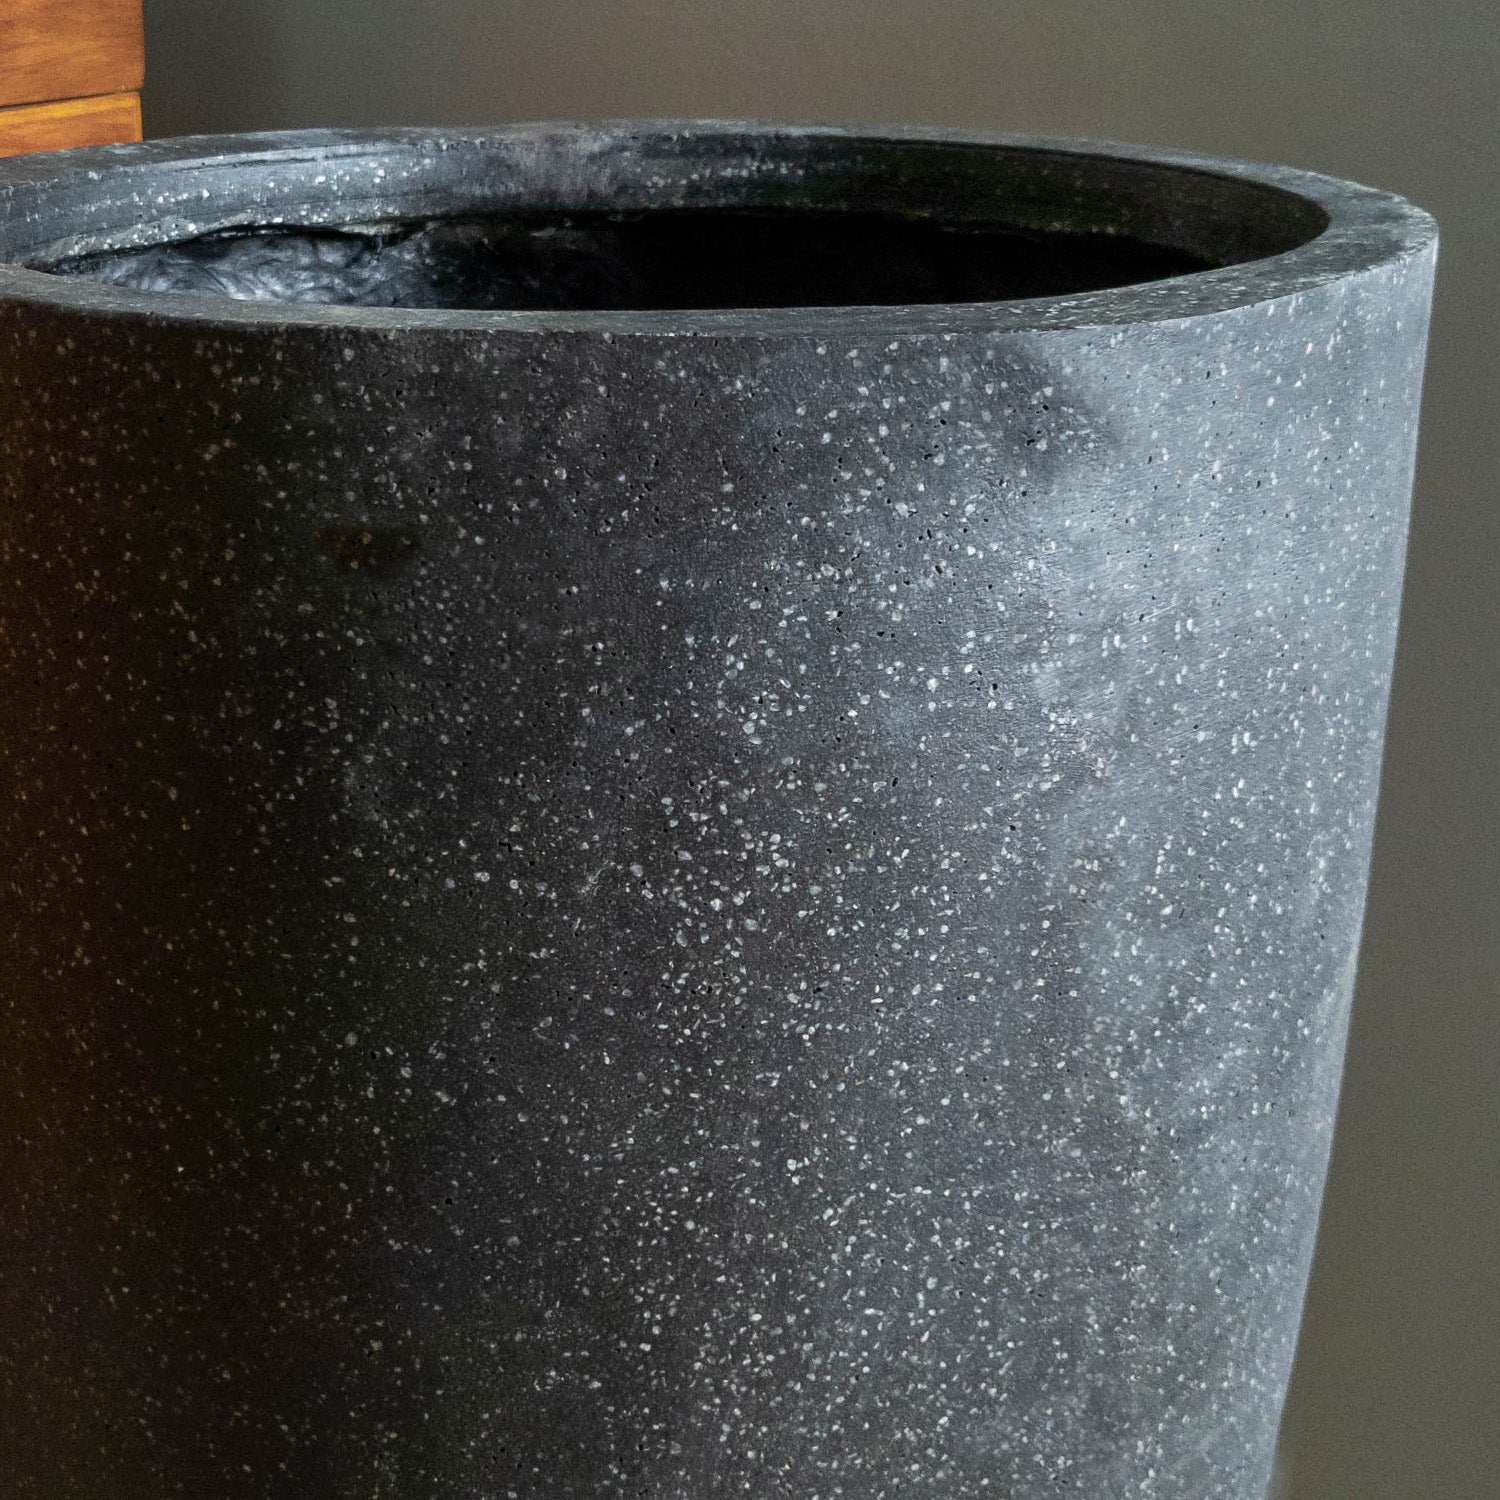 Distressed Textured: Kawa Granite Black Planter, 31.5"H